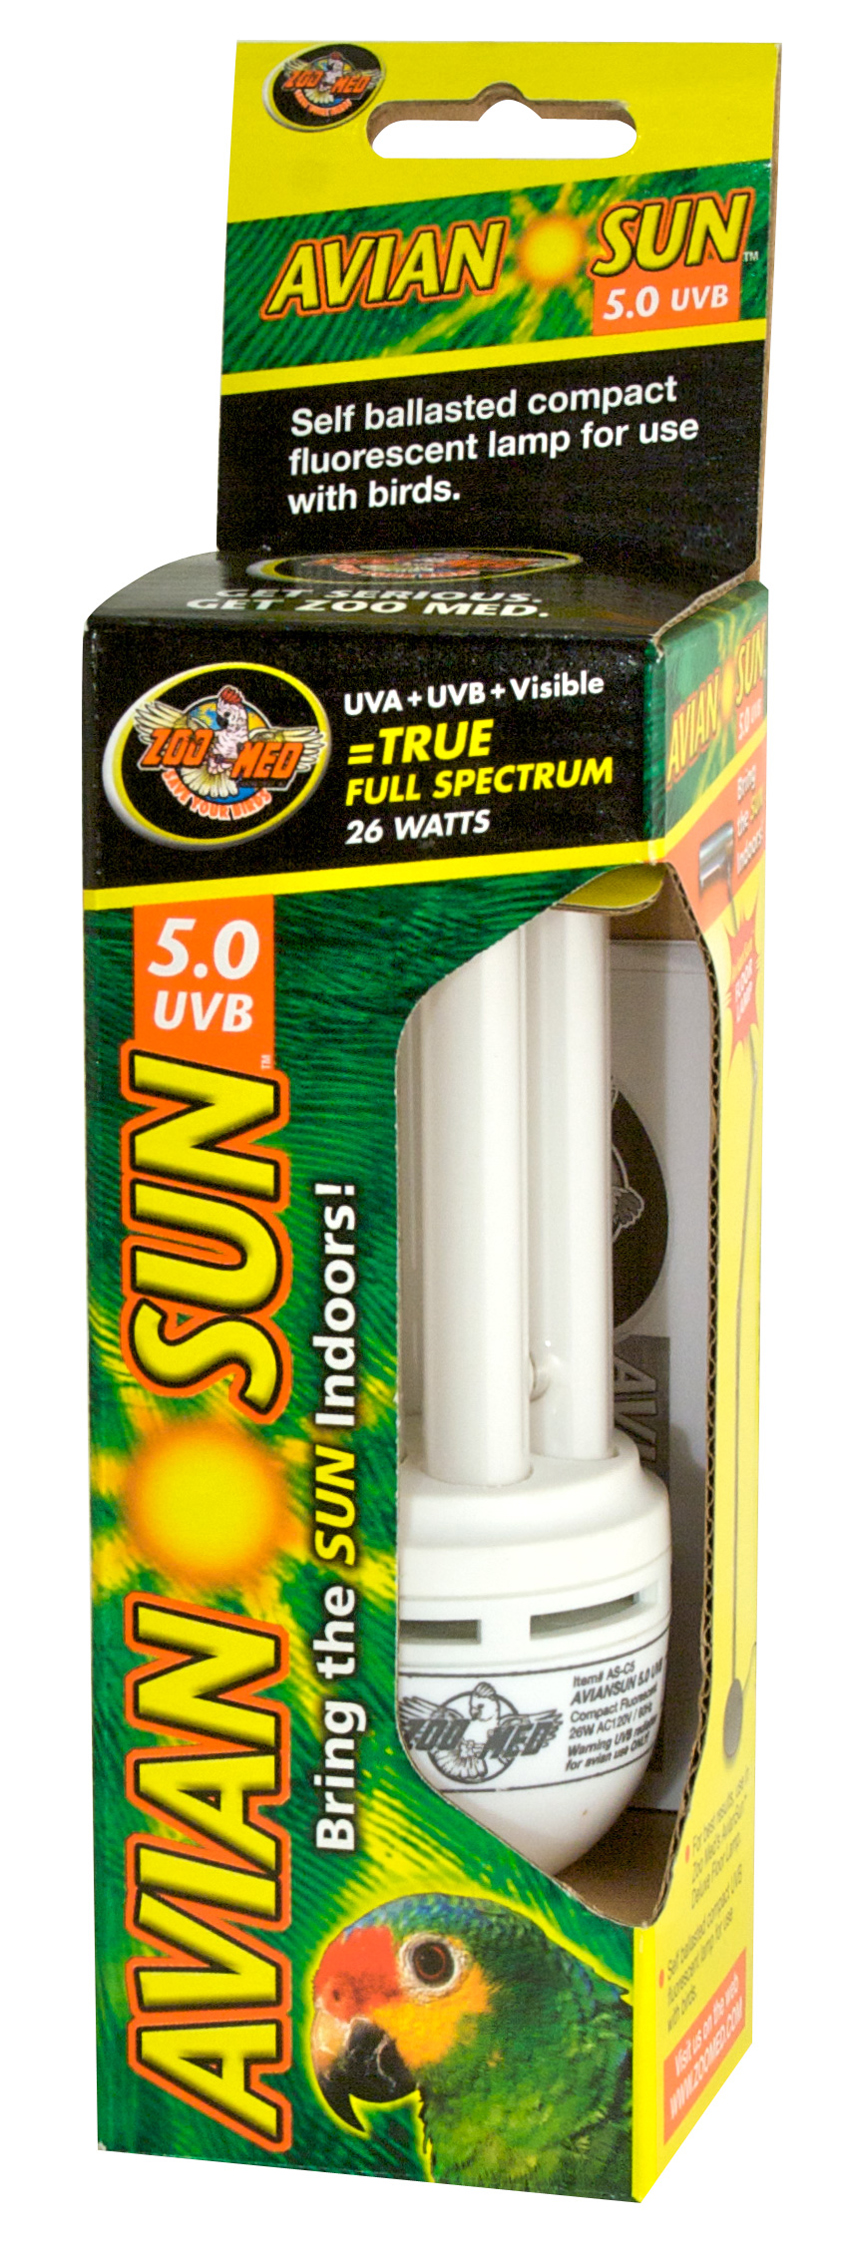 AVIAN SUN 5.0 UVB FLUORESCENT LAMP